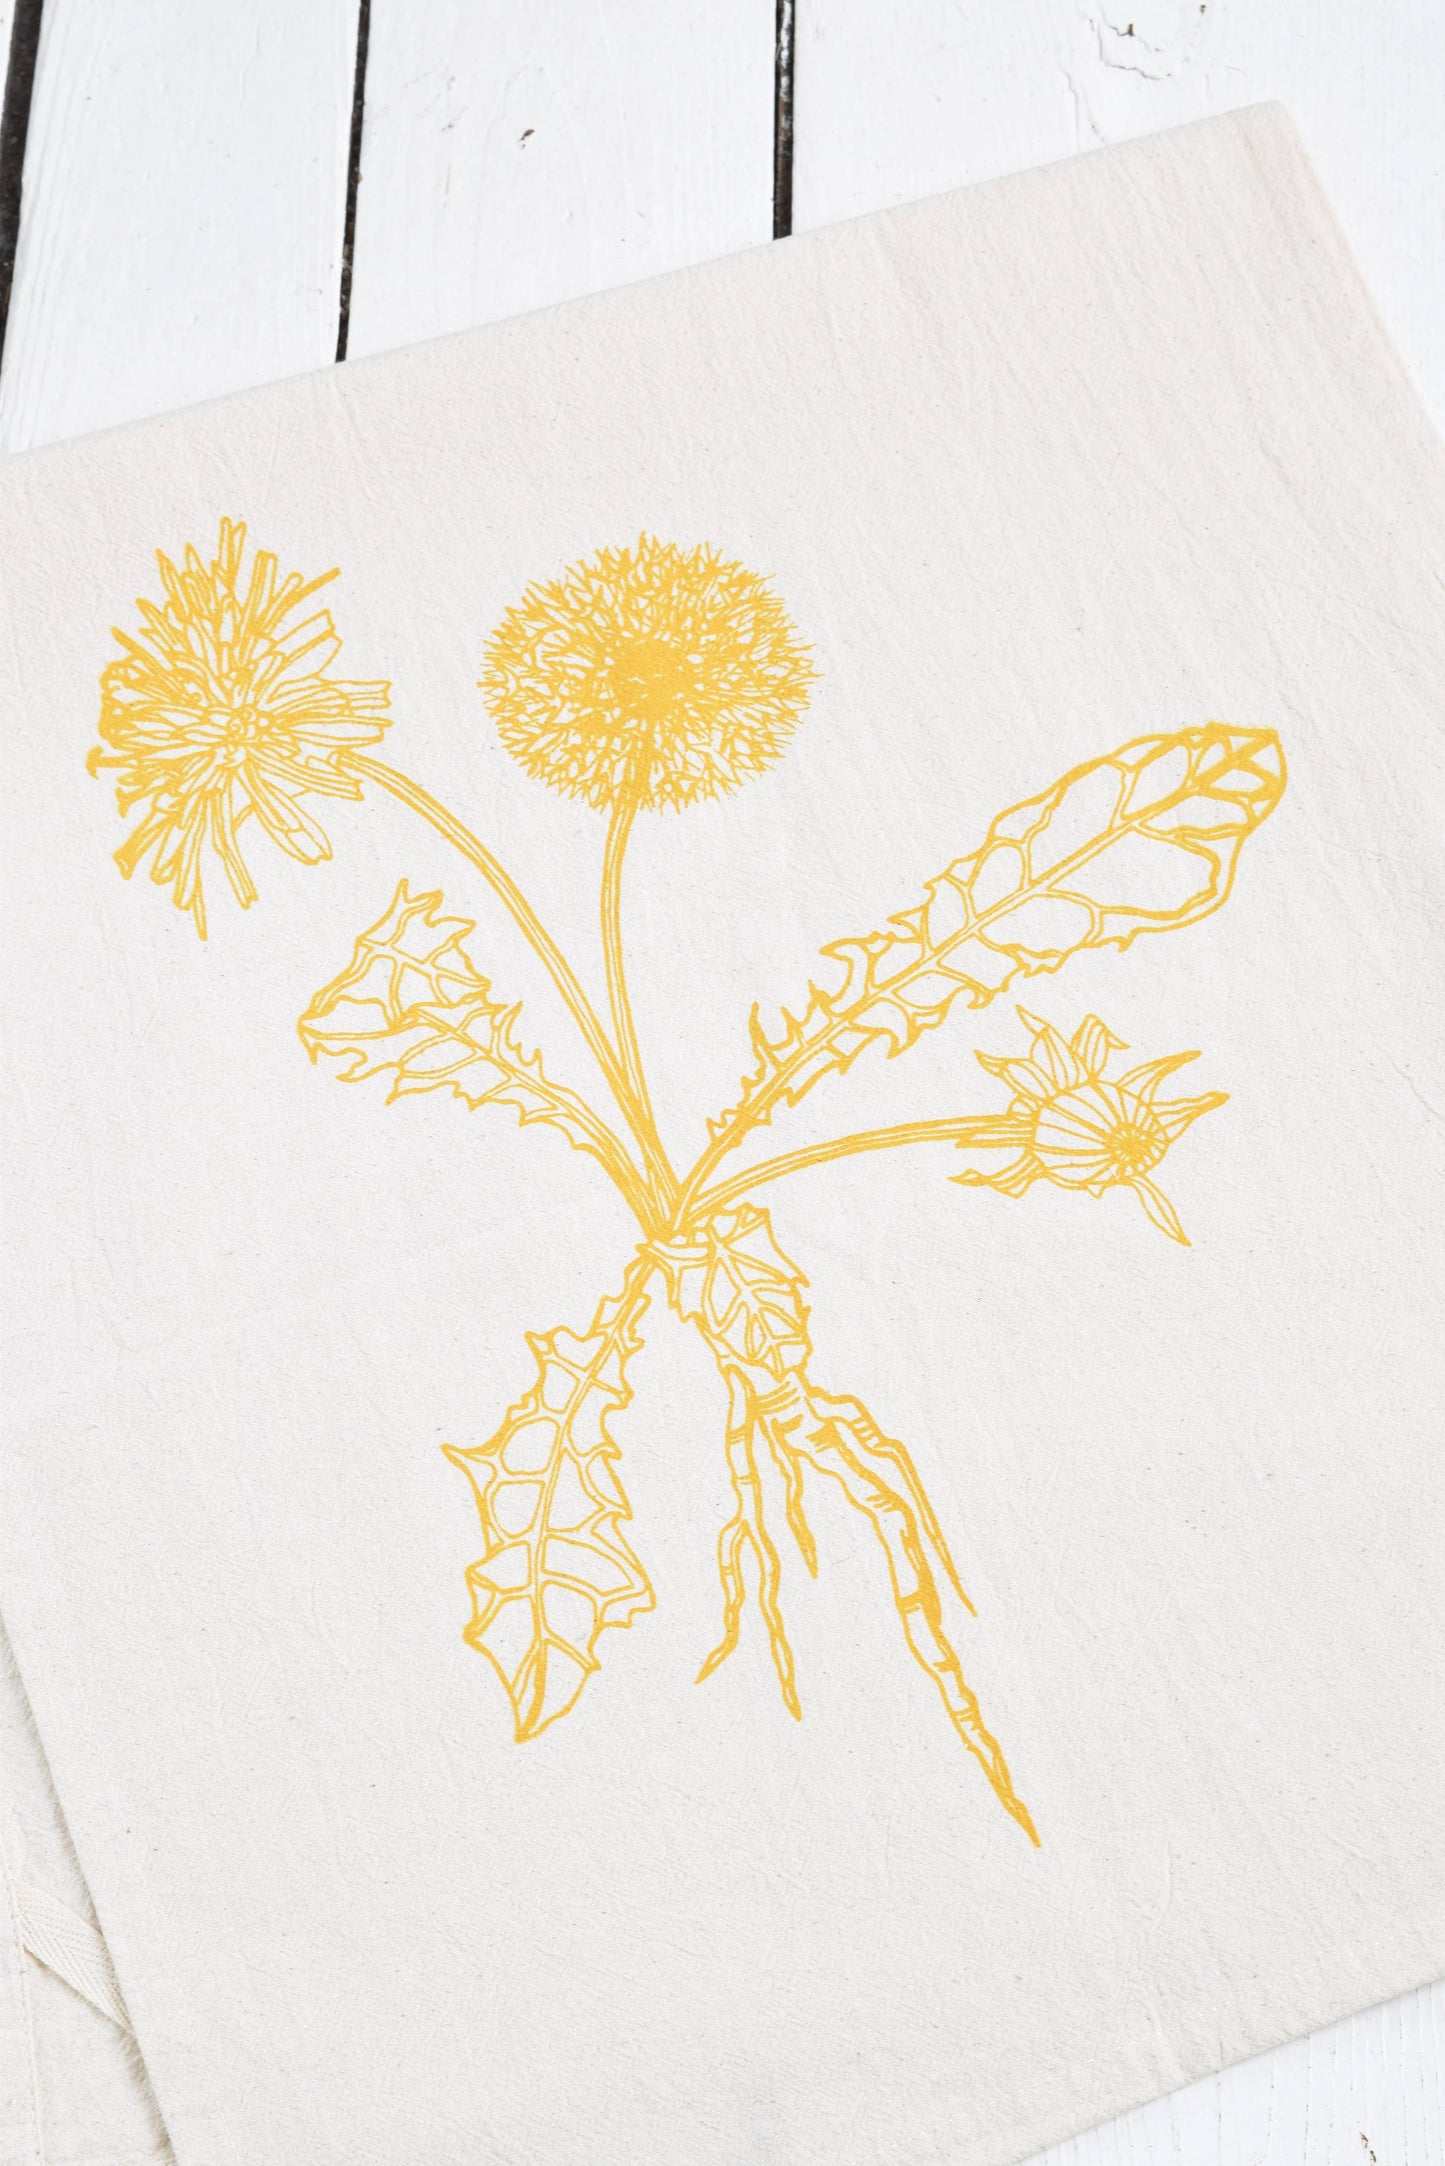 Dandelion Tea Towel - Mustard Yellow - Kitchen Decor - Gifts